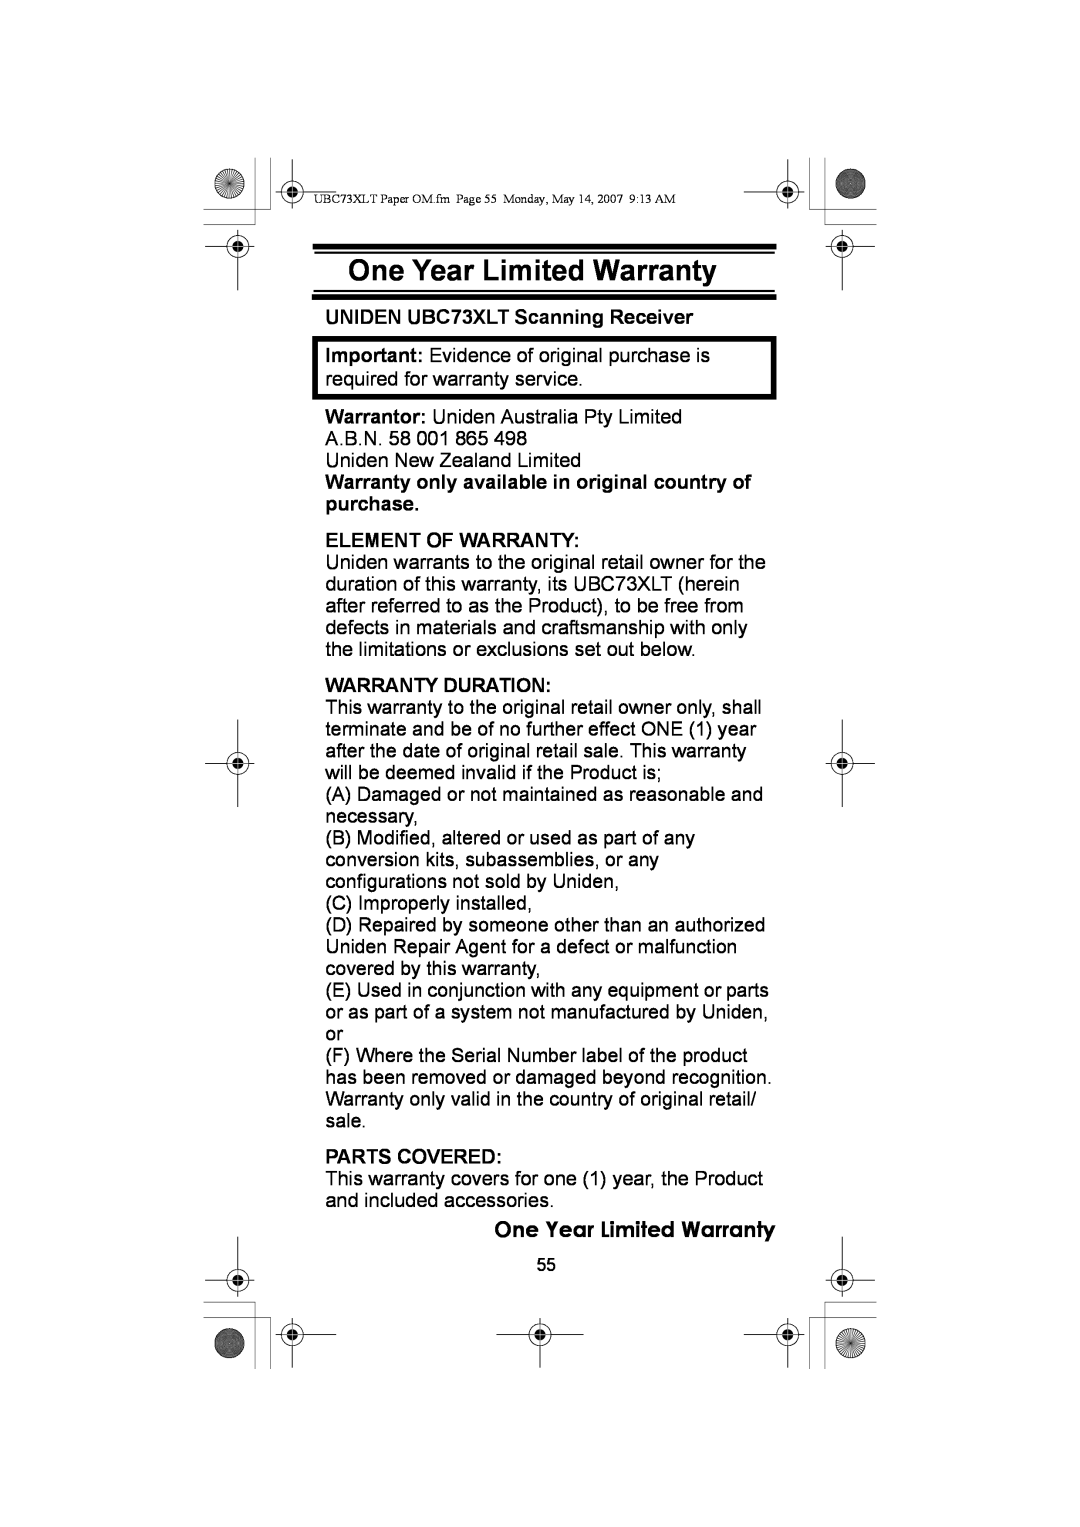 Uniden owner manual One Year Limited Warranty, UNIDEN UBC73XLT Scanning Receiver, Element Of Warranty, Warranty Duration 